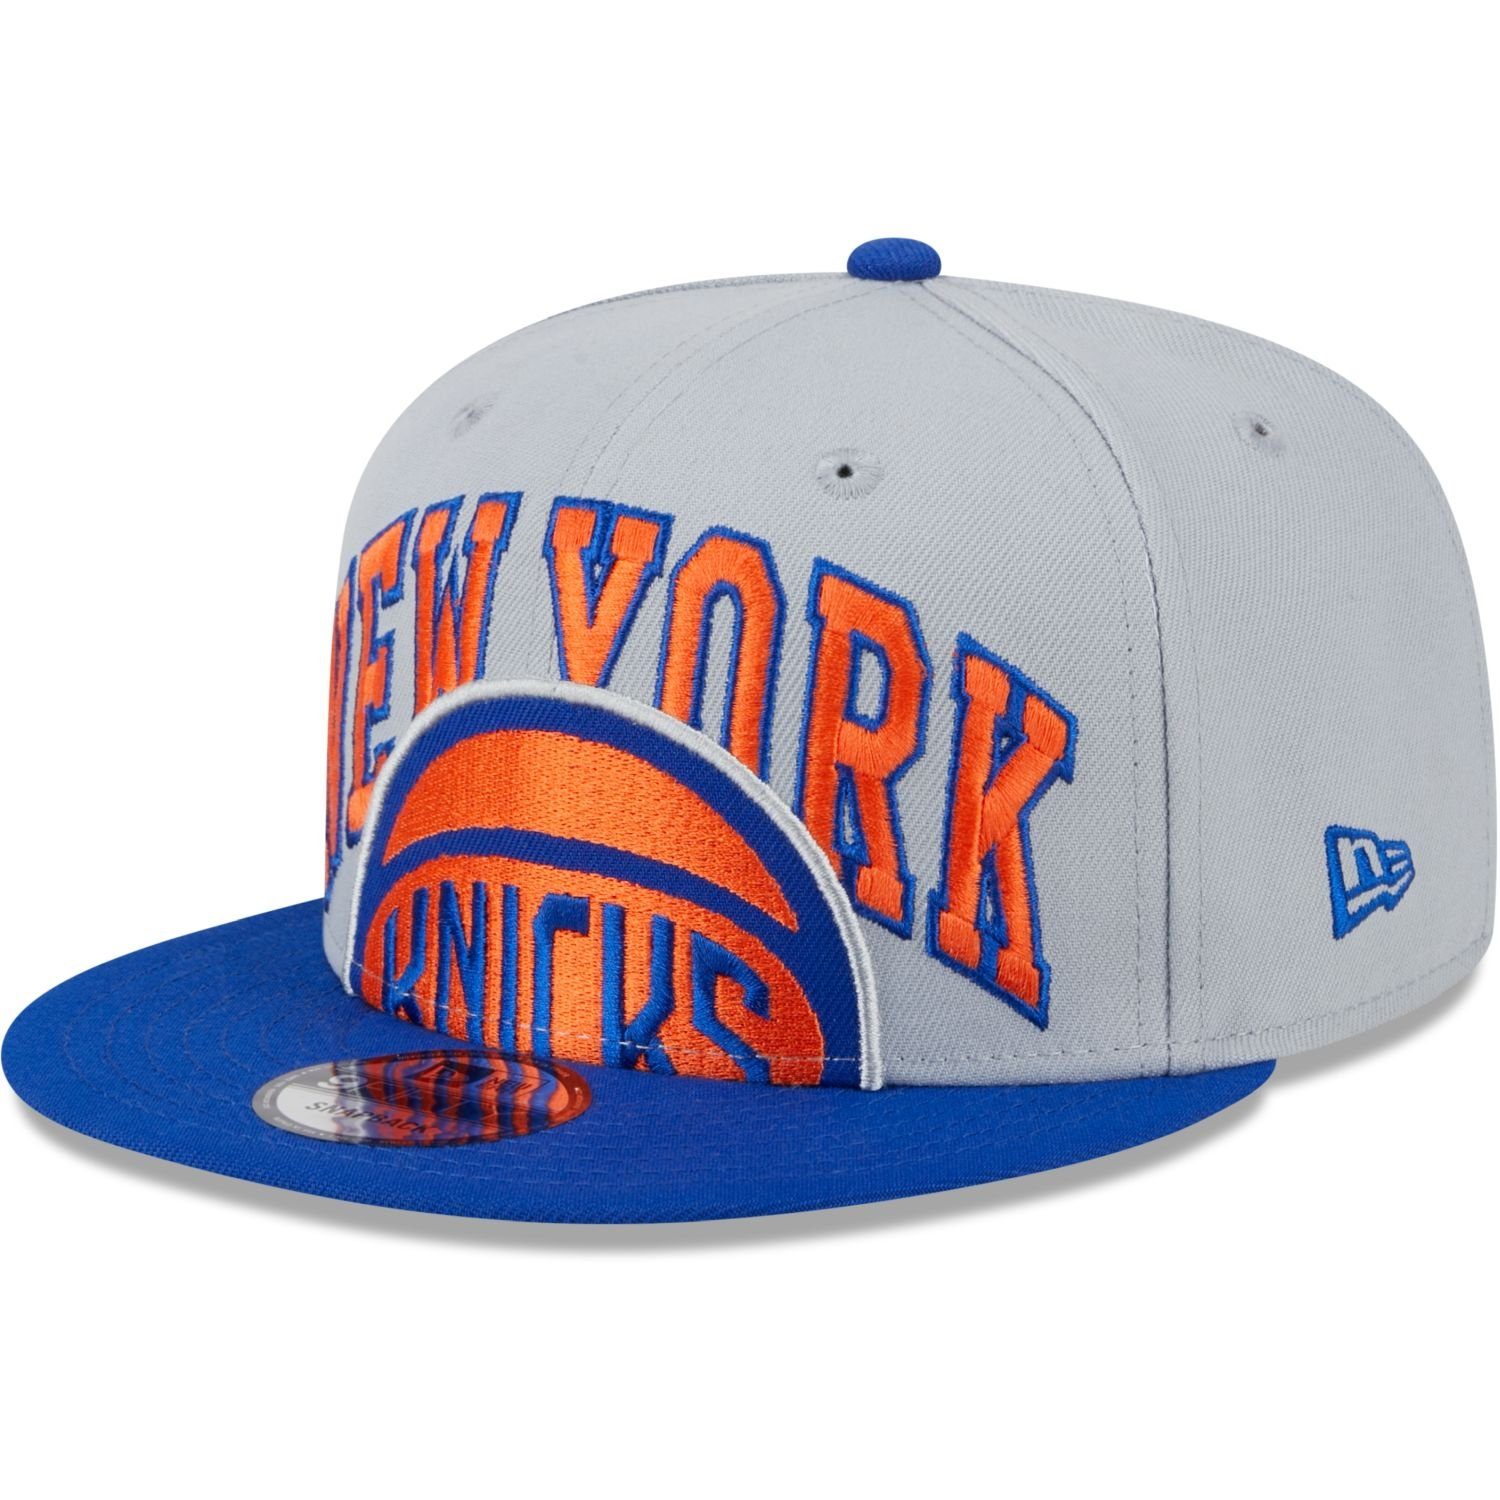 New Era Snapback Cap 9FIFTY NBA TIPOFF New York Knicks